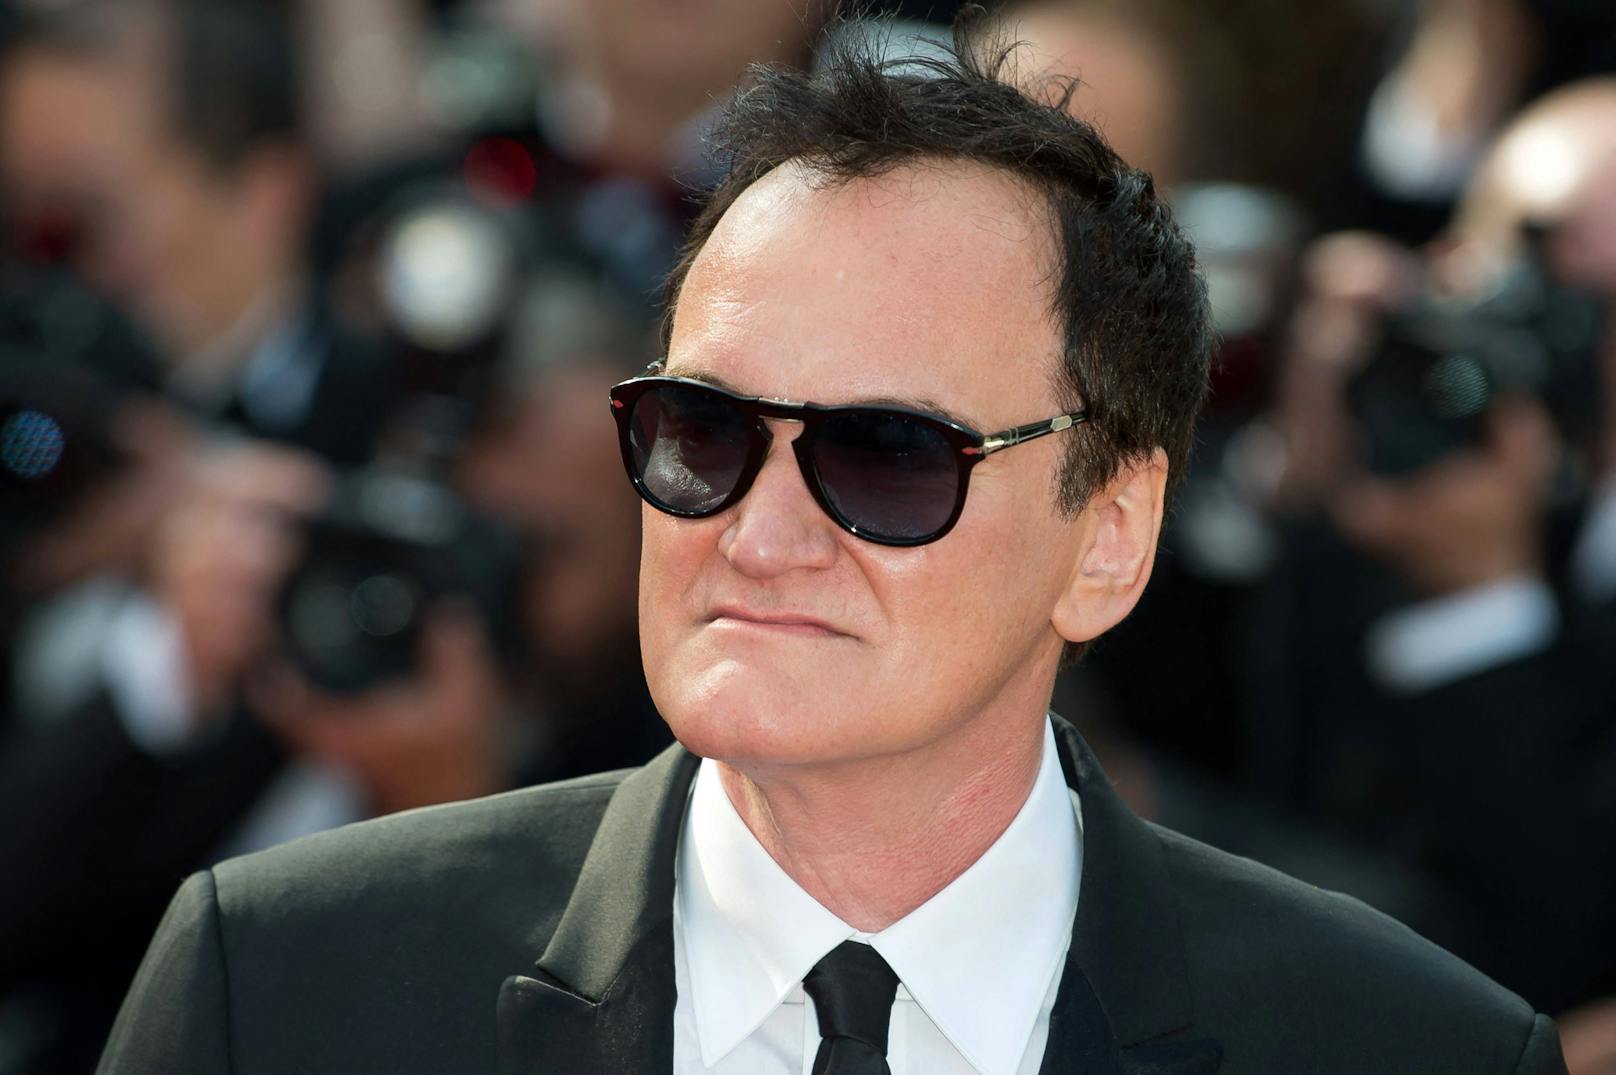 Tarantino äußert sich zu "Kill Bill" Fortsetzung